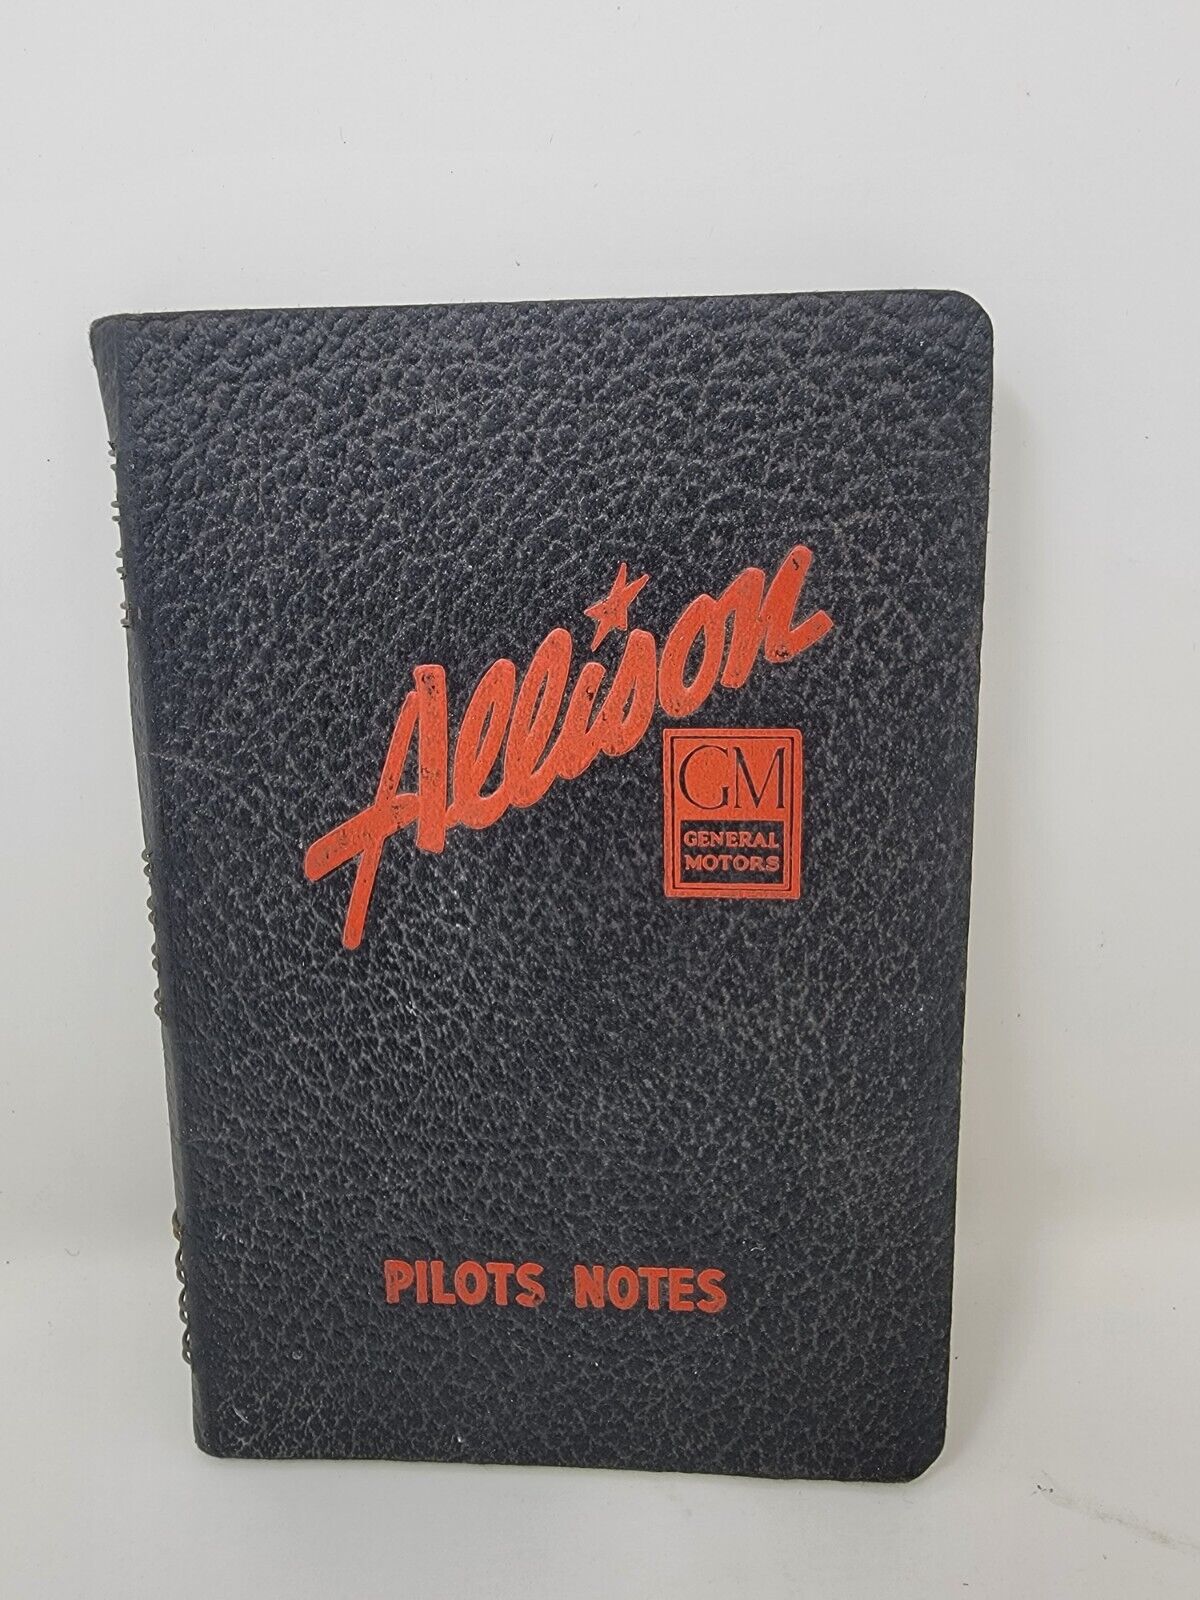 WW2 Allison Pilot Notes 1943 General Motors - Very Rare